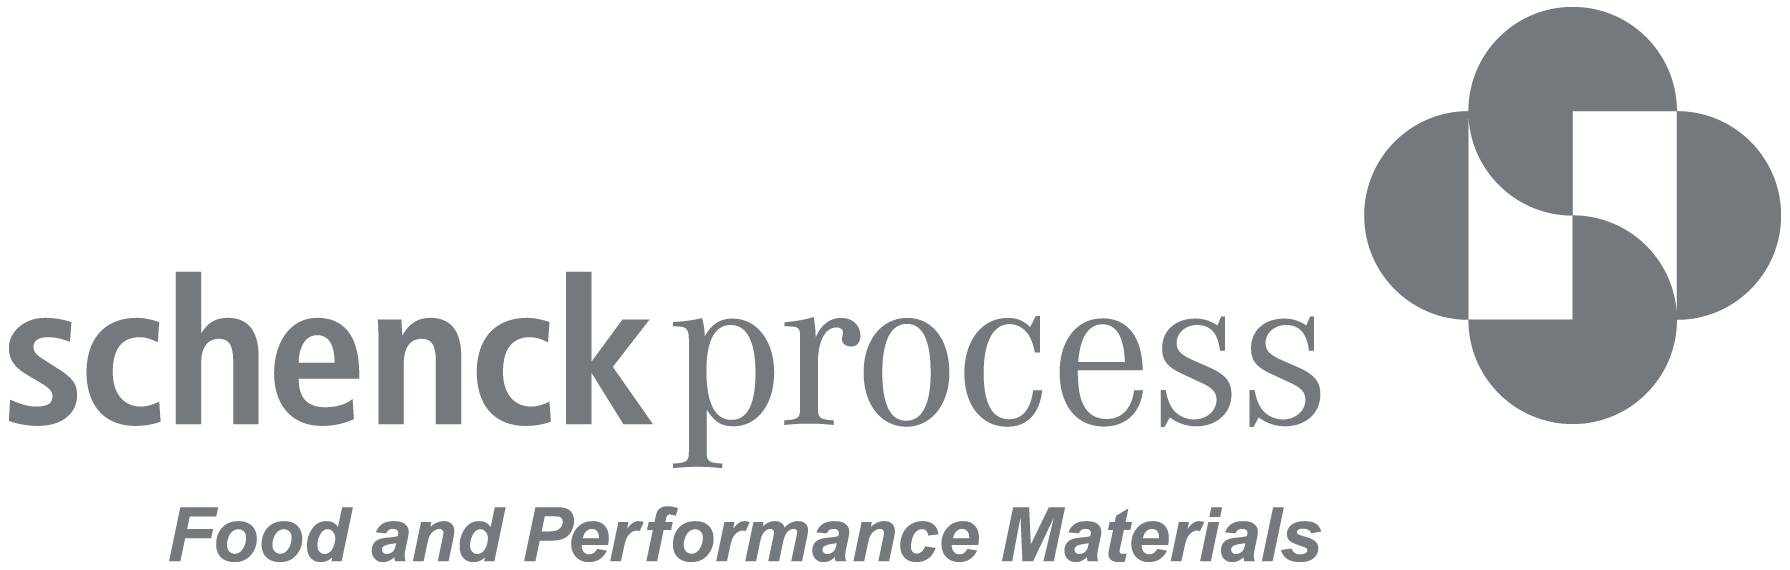 Schenck Process Food and Performance Materials